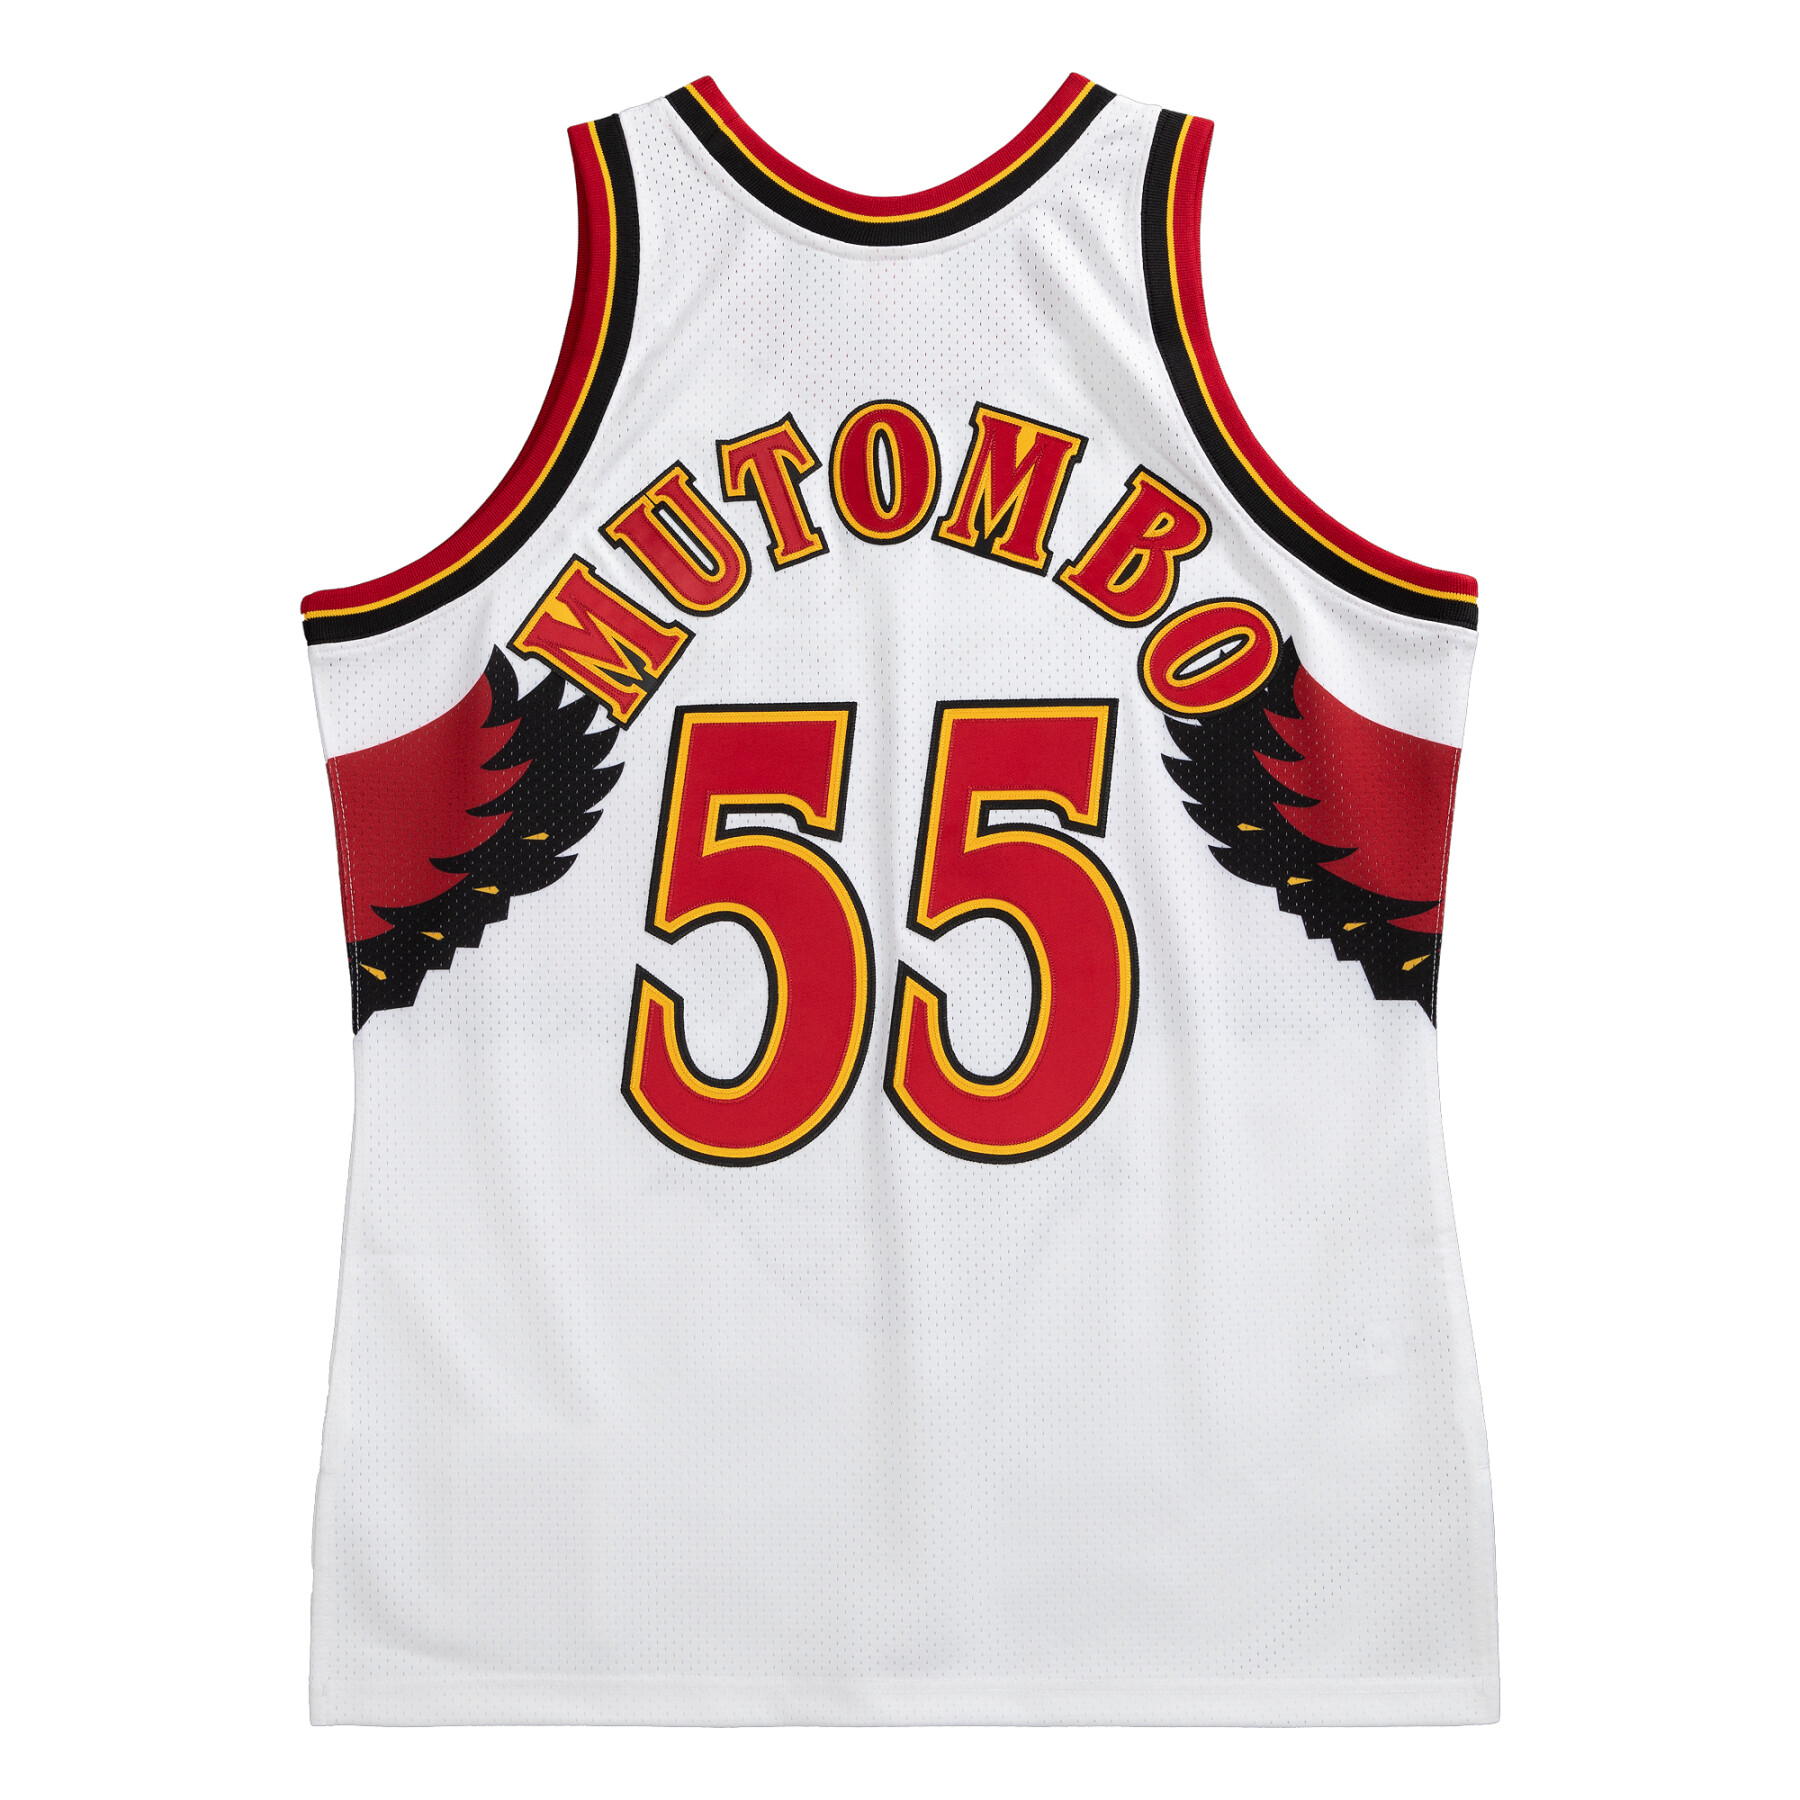 Jersey Atlanta Hawks Authentic Dikembe Mutombo 1996-97